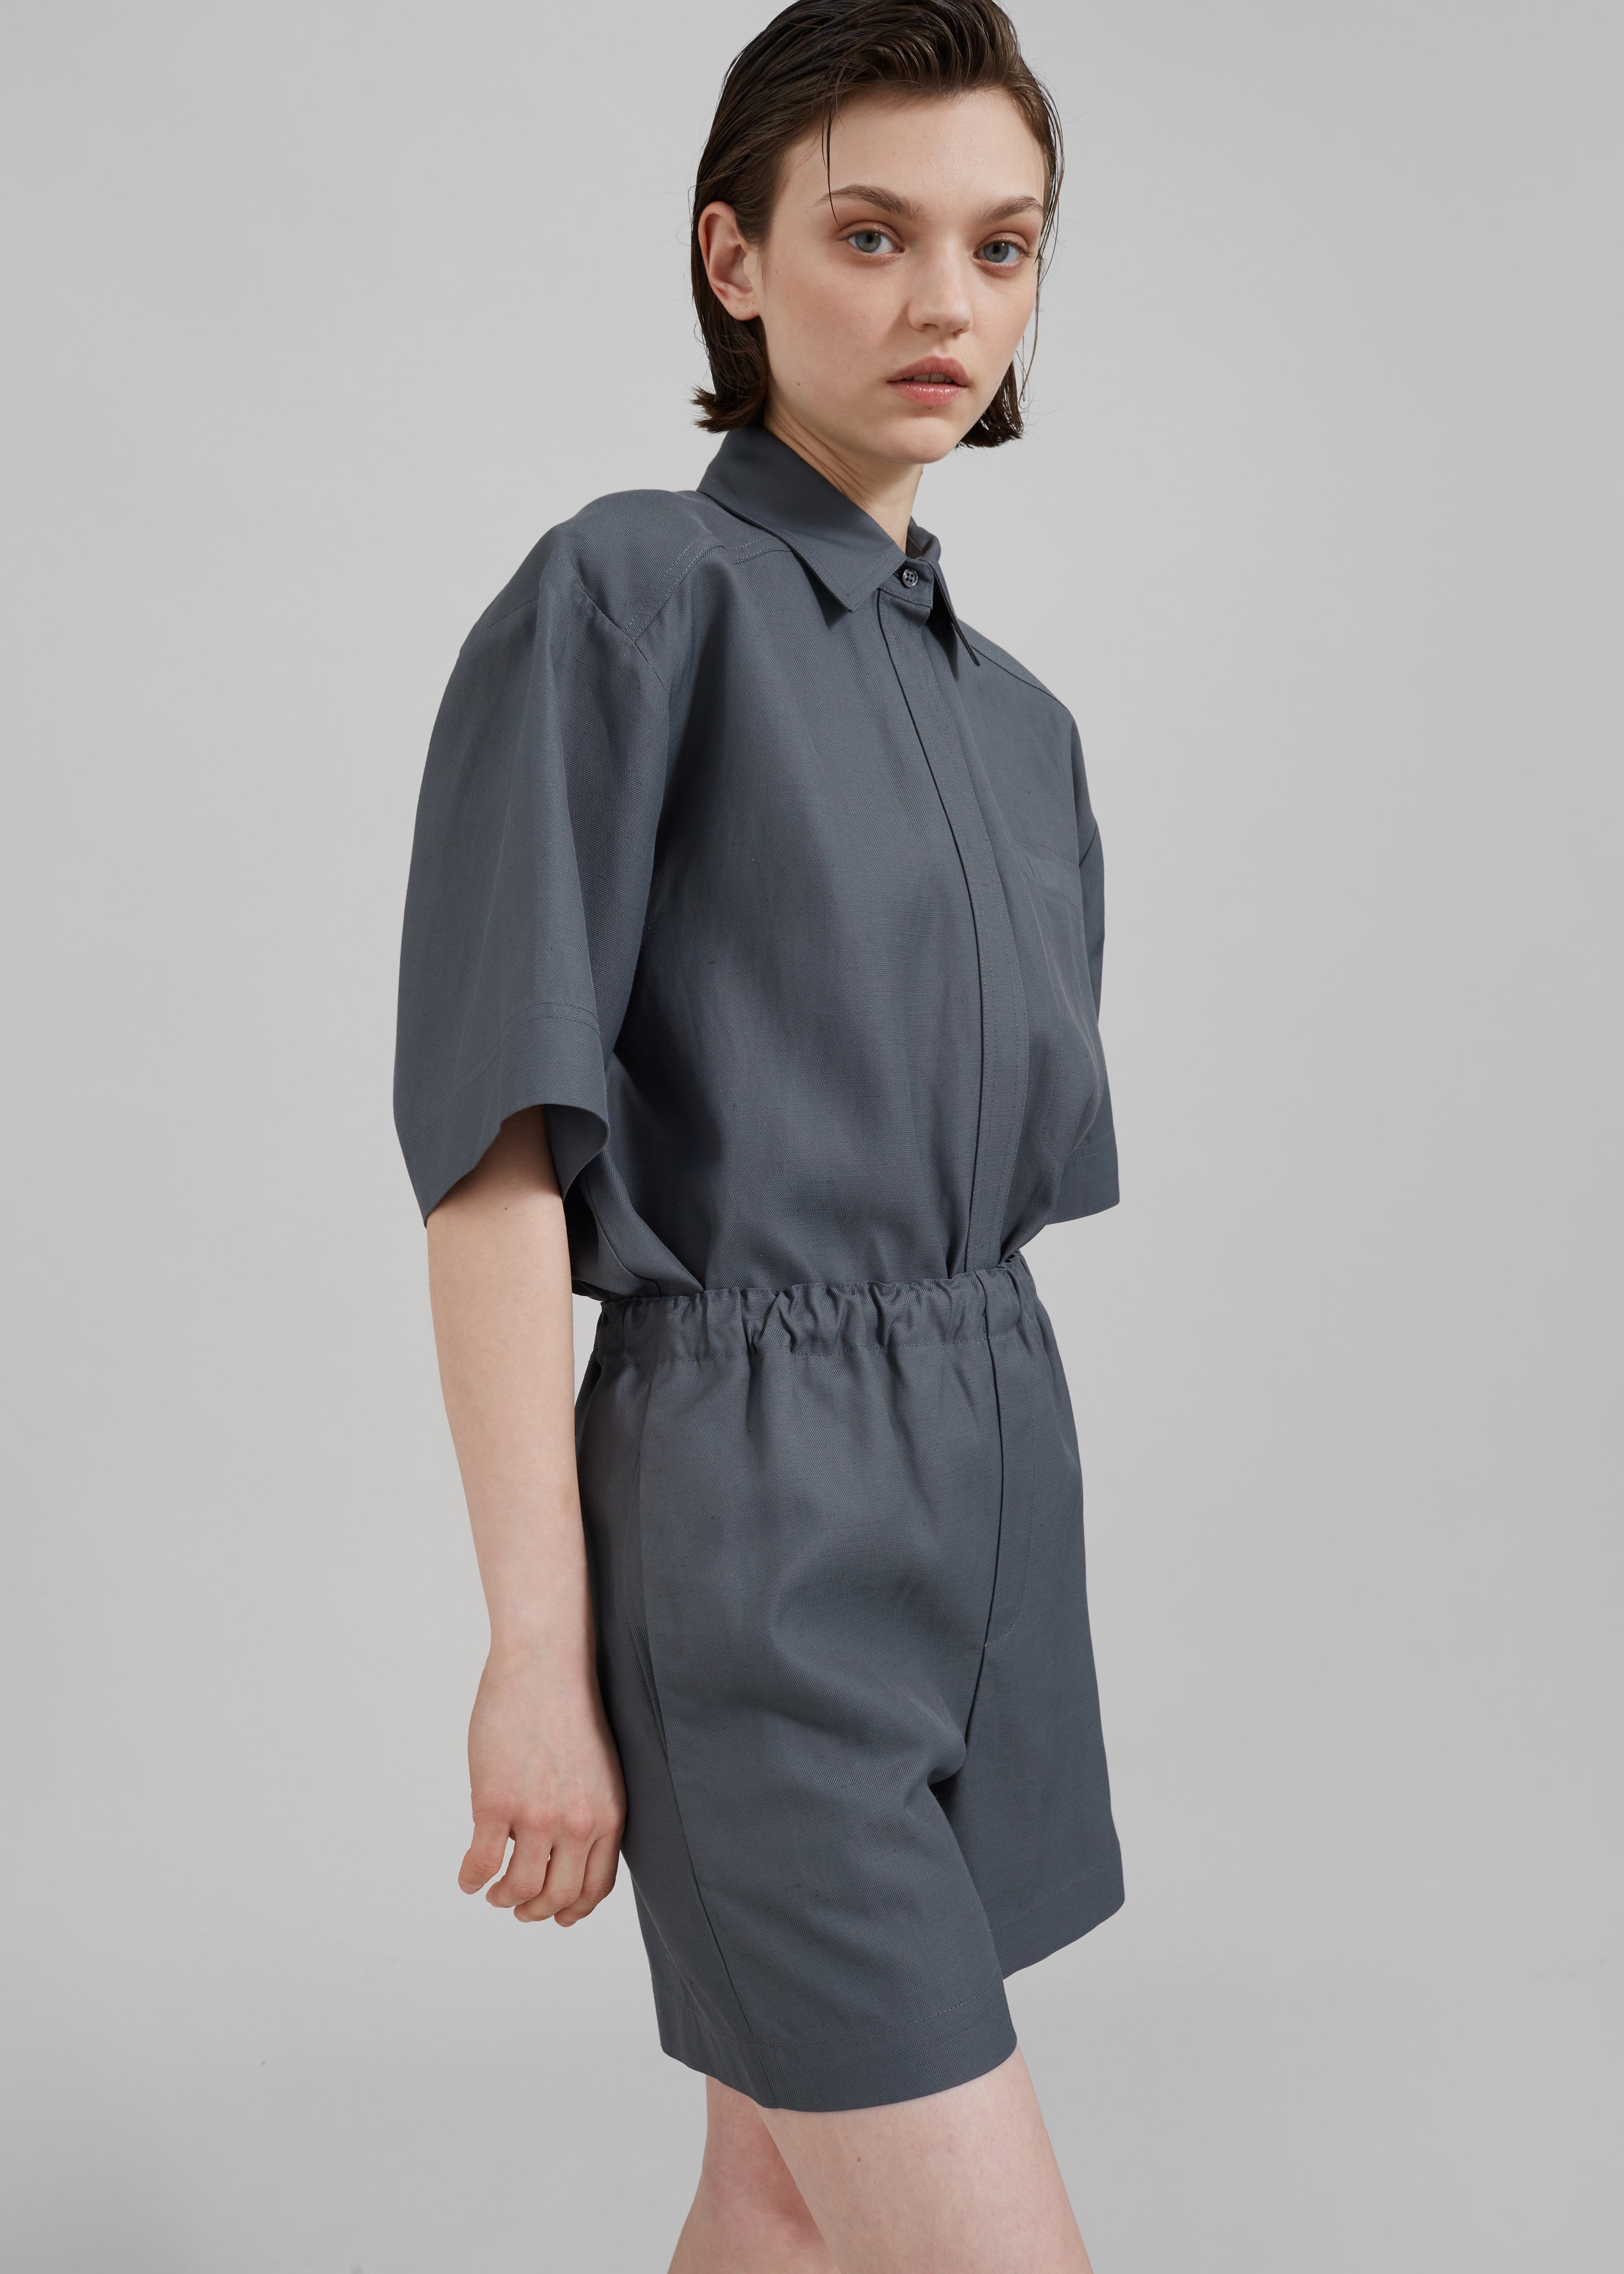 Loulou Studio Moheli Short Sleeve Shirt - Fjord Grey - 7